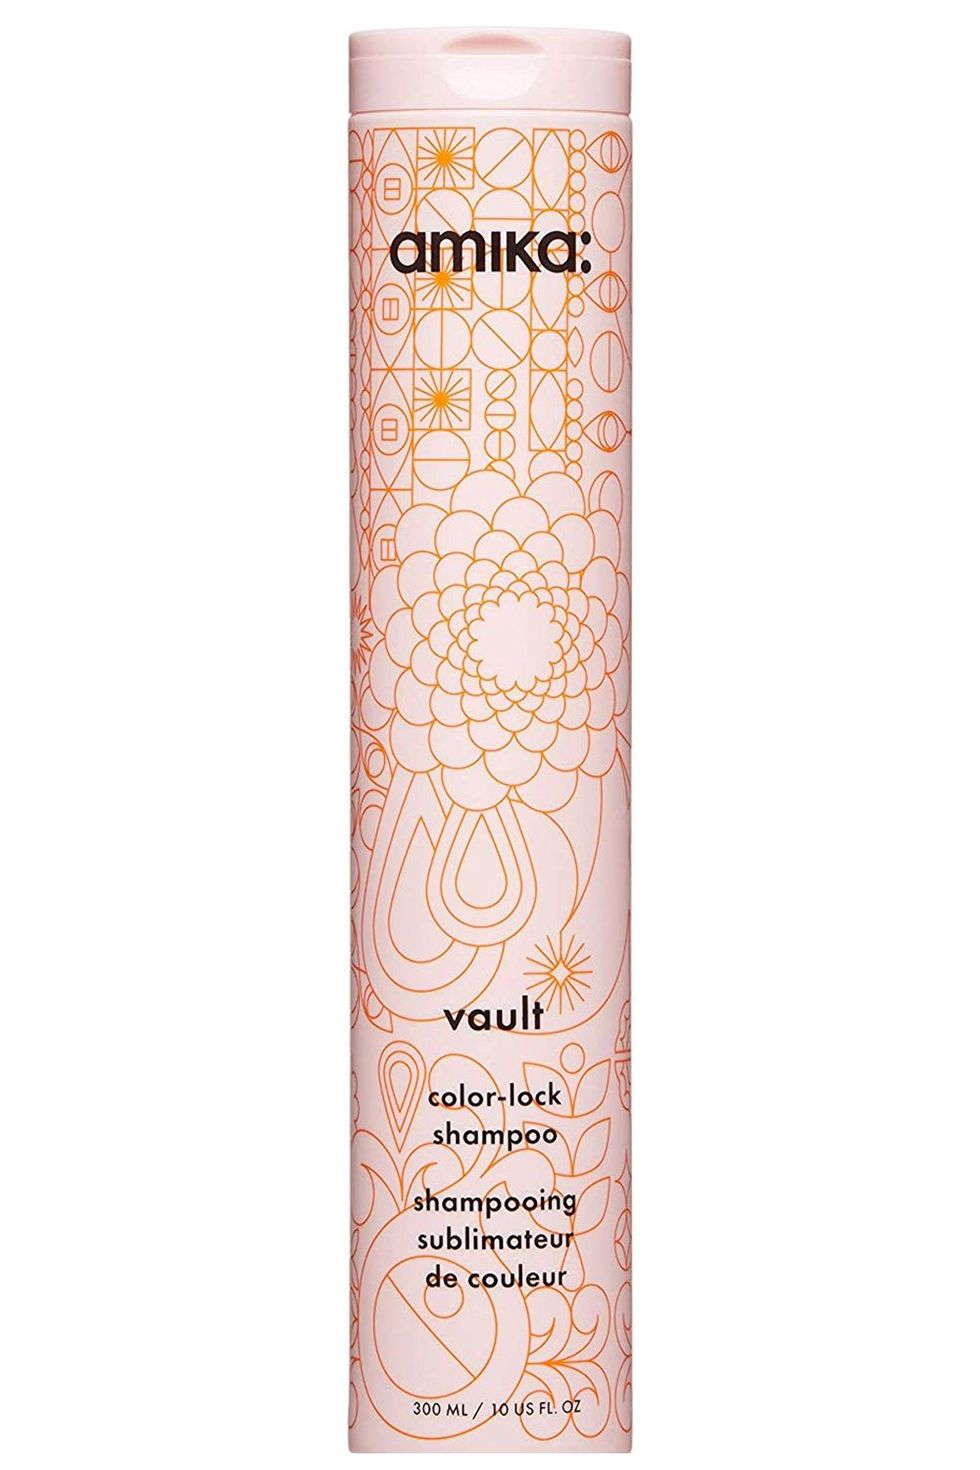 Amika Vault Color-Lock Shampoo